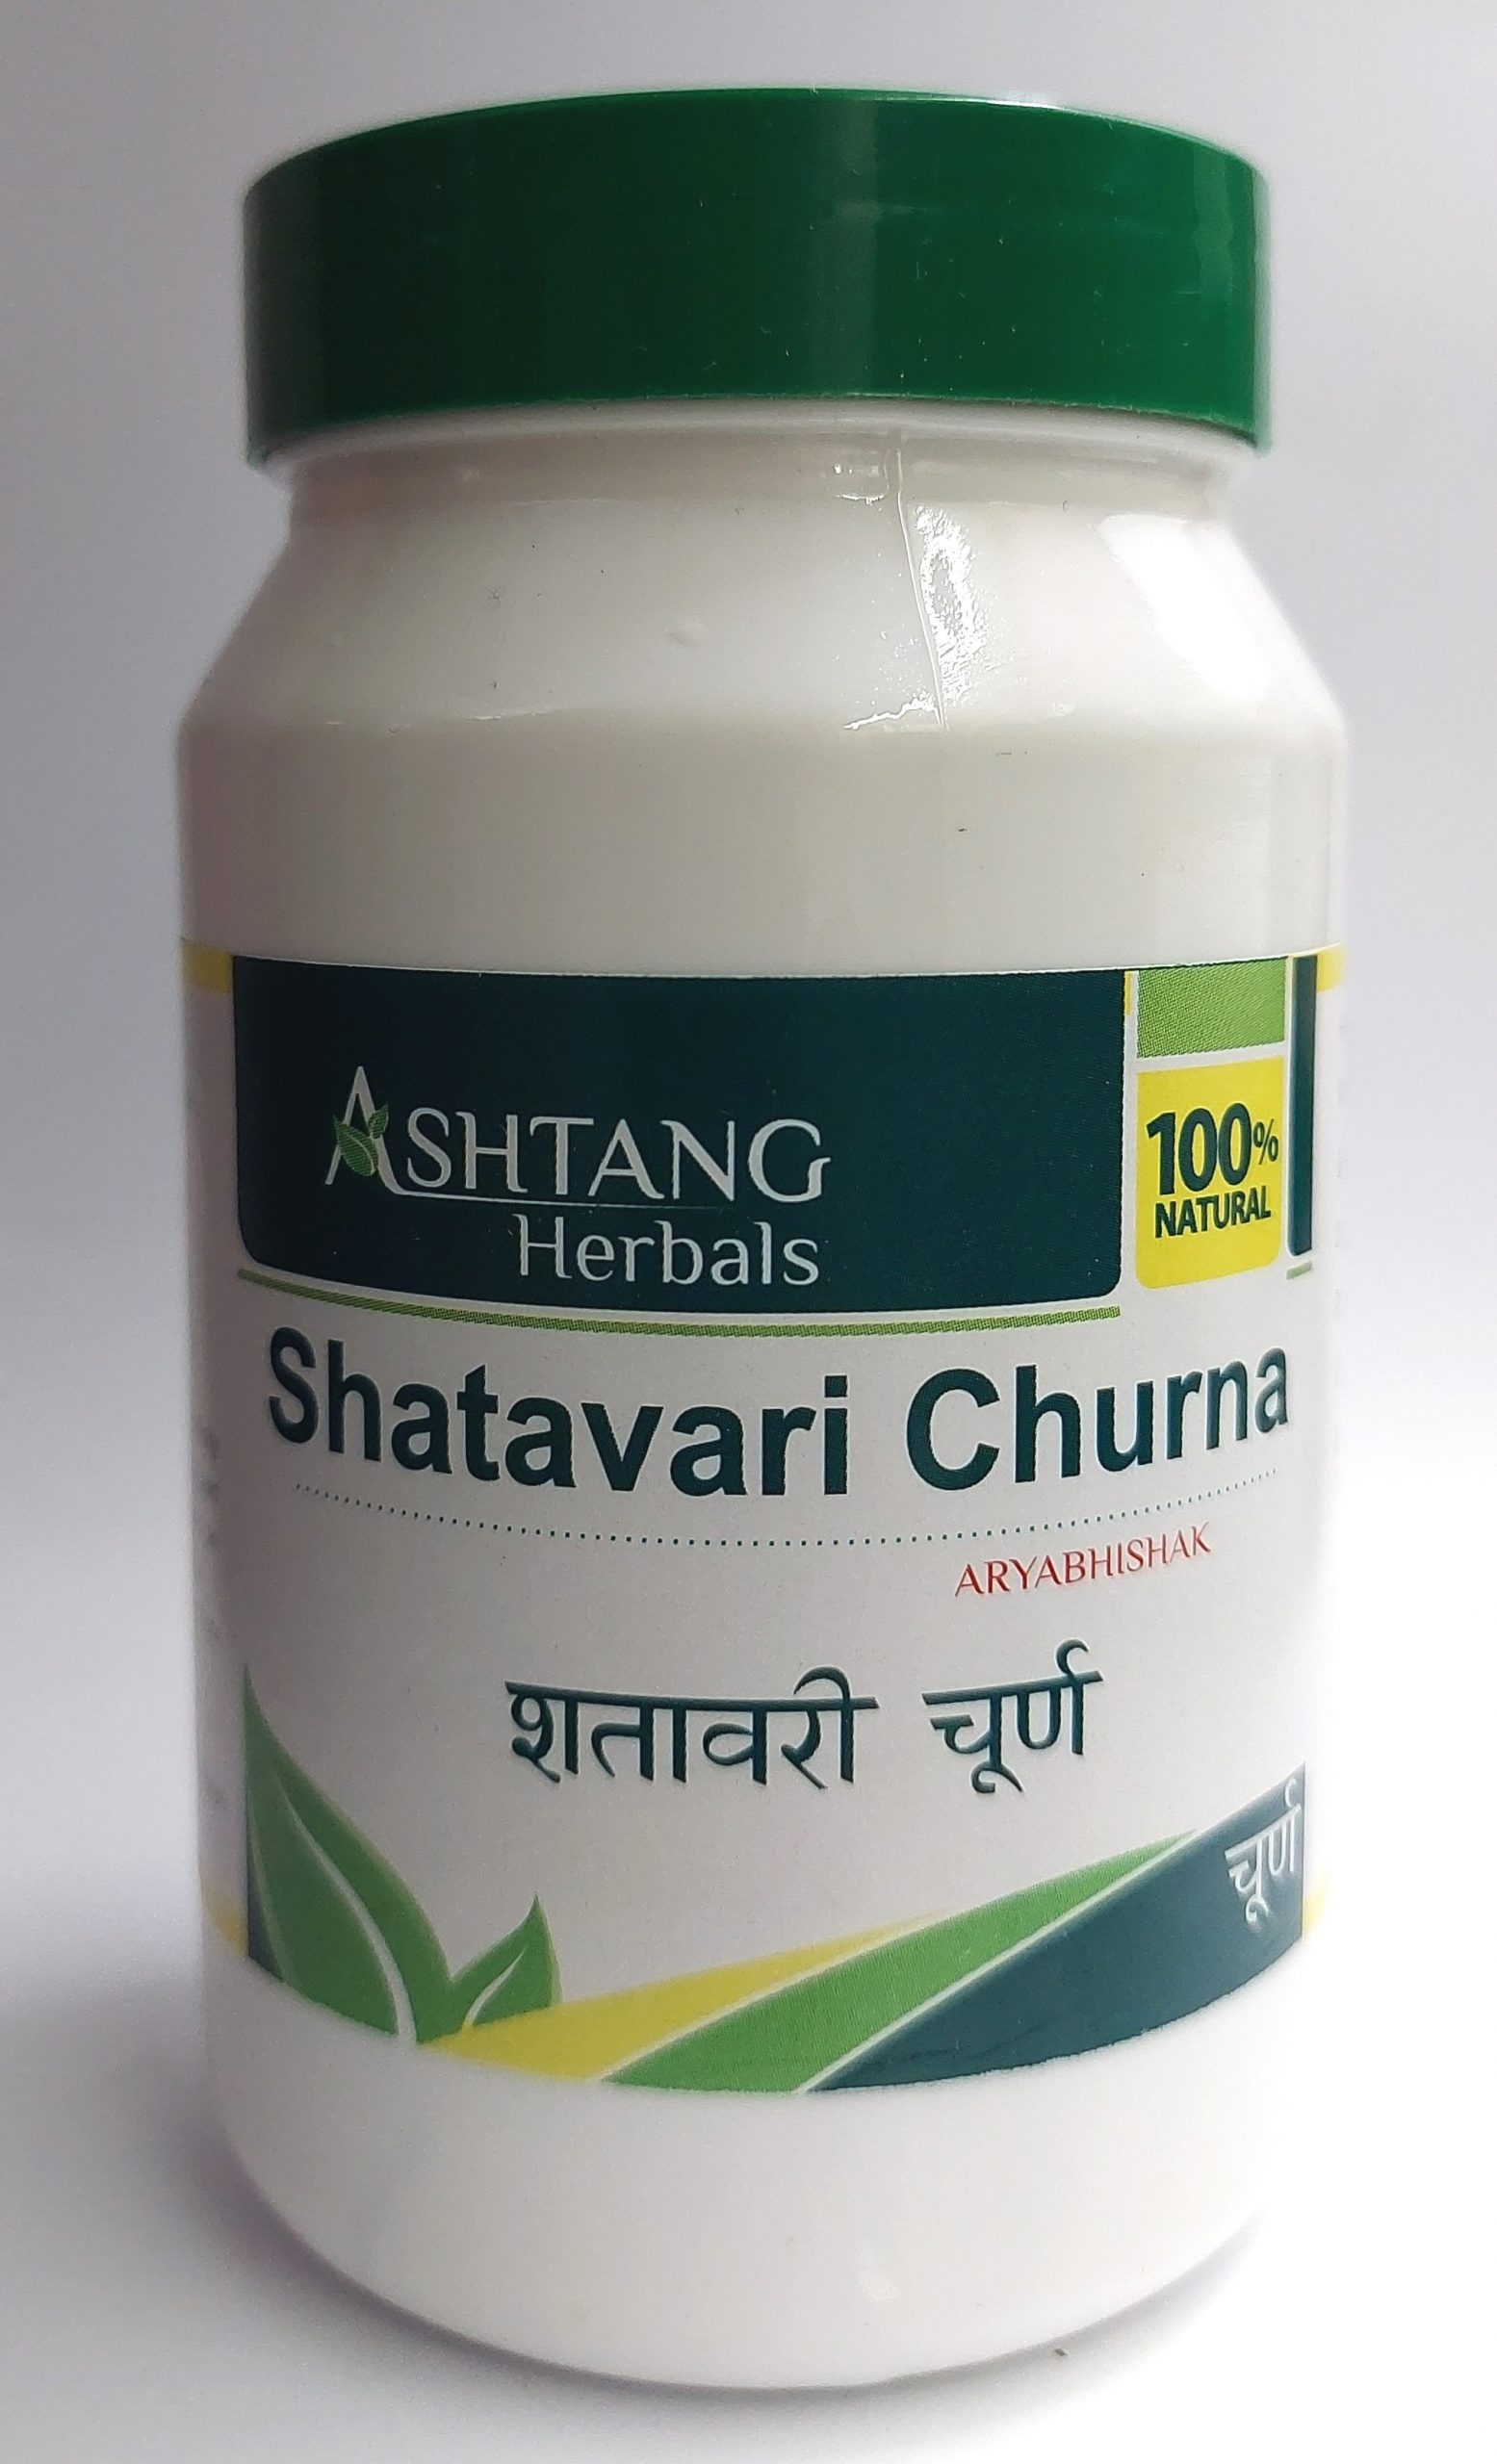 Shatavari churna benefits for men in hindi